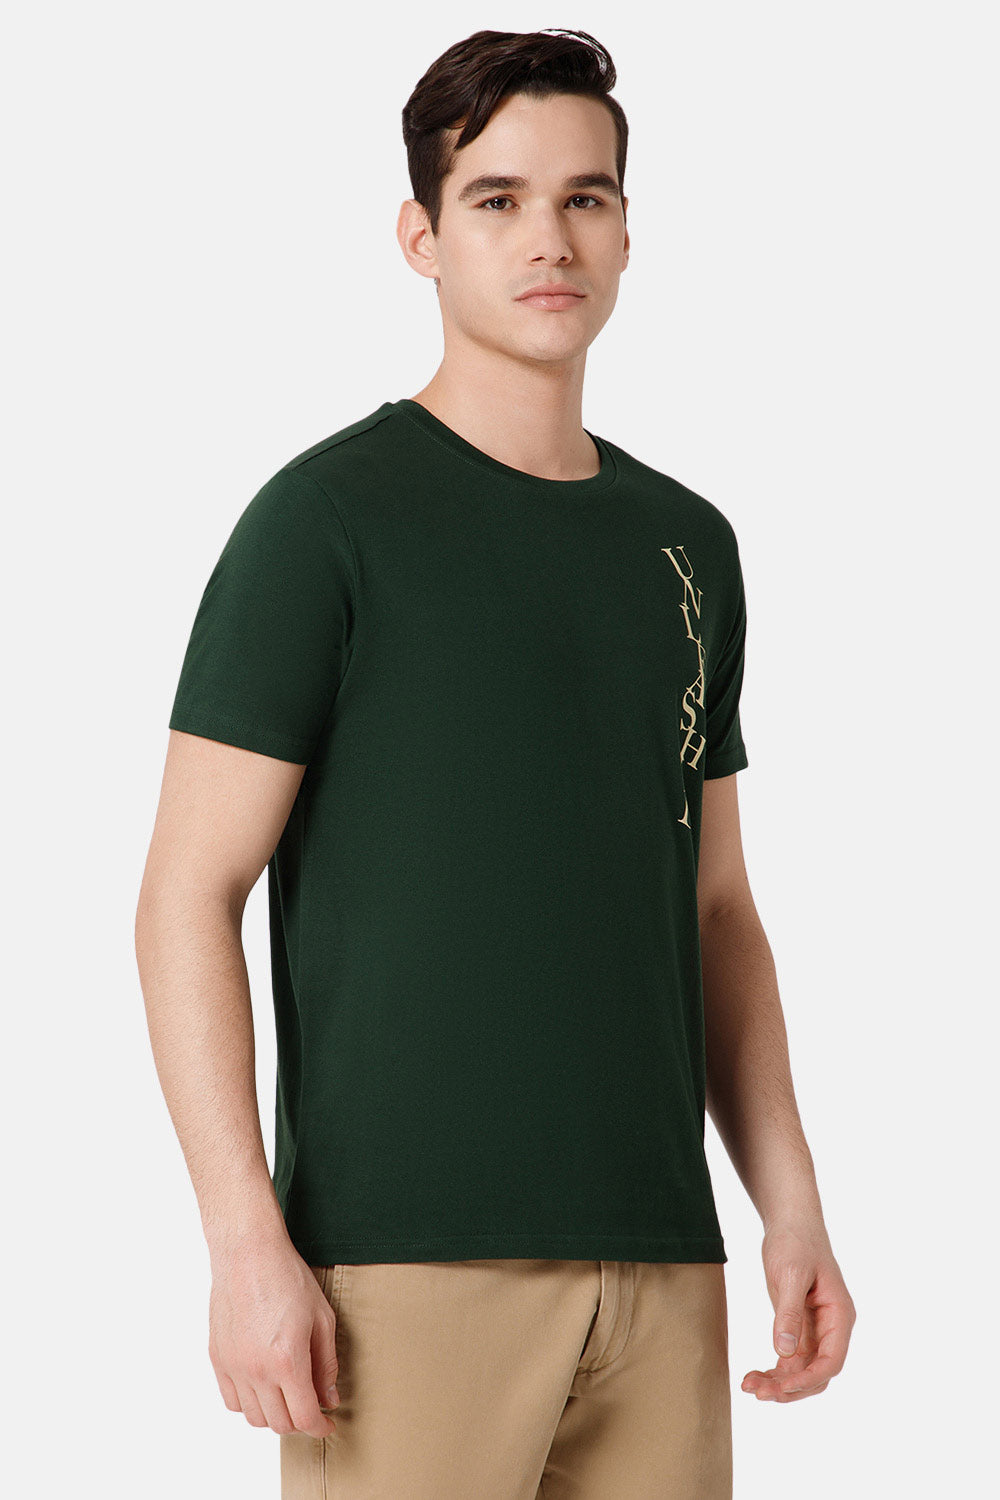 Enhance Printed Crew Neck Men's Casual T-Shirts - Green - TS18